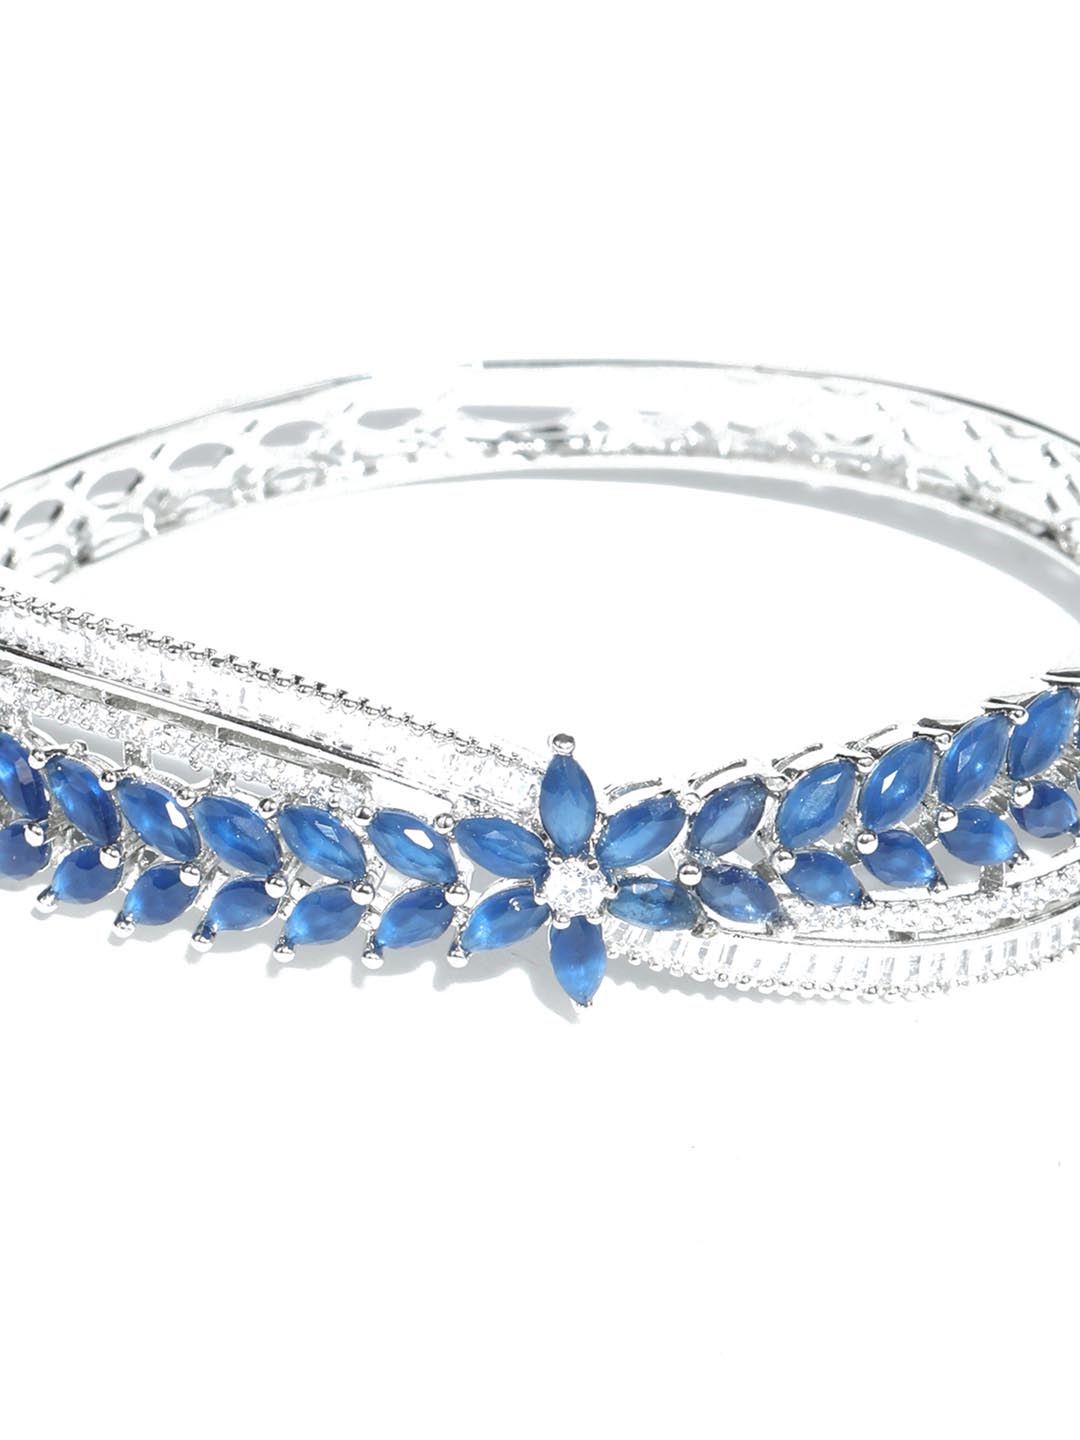 BLUE DIAMOND TENNIS BRACELET  Anamera